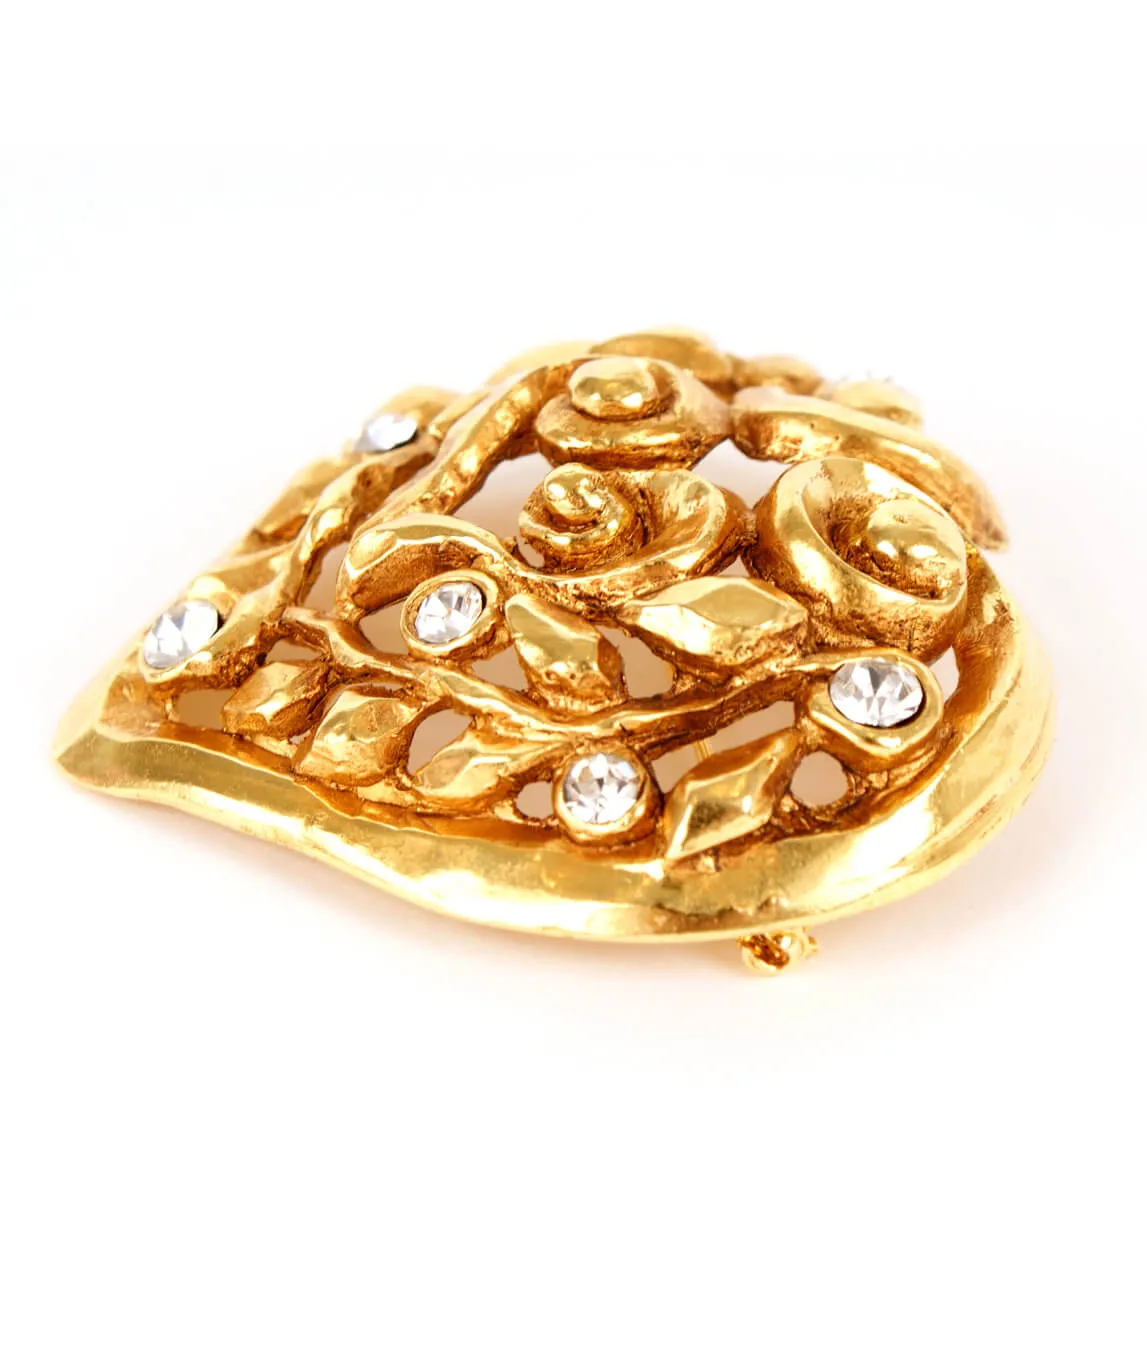 Lacroix gold brooch side